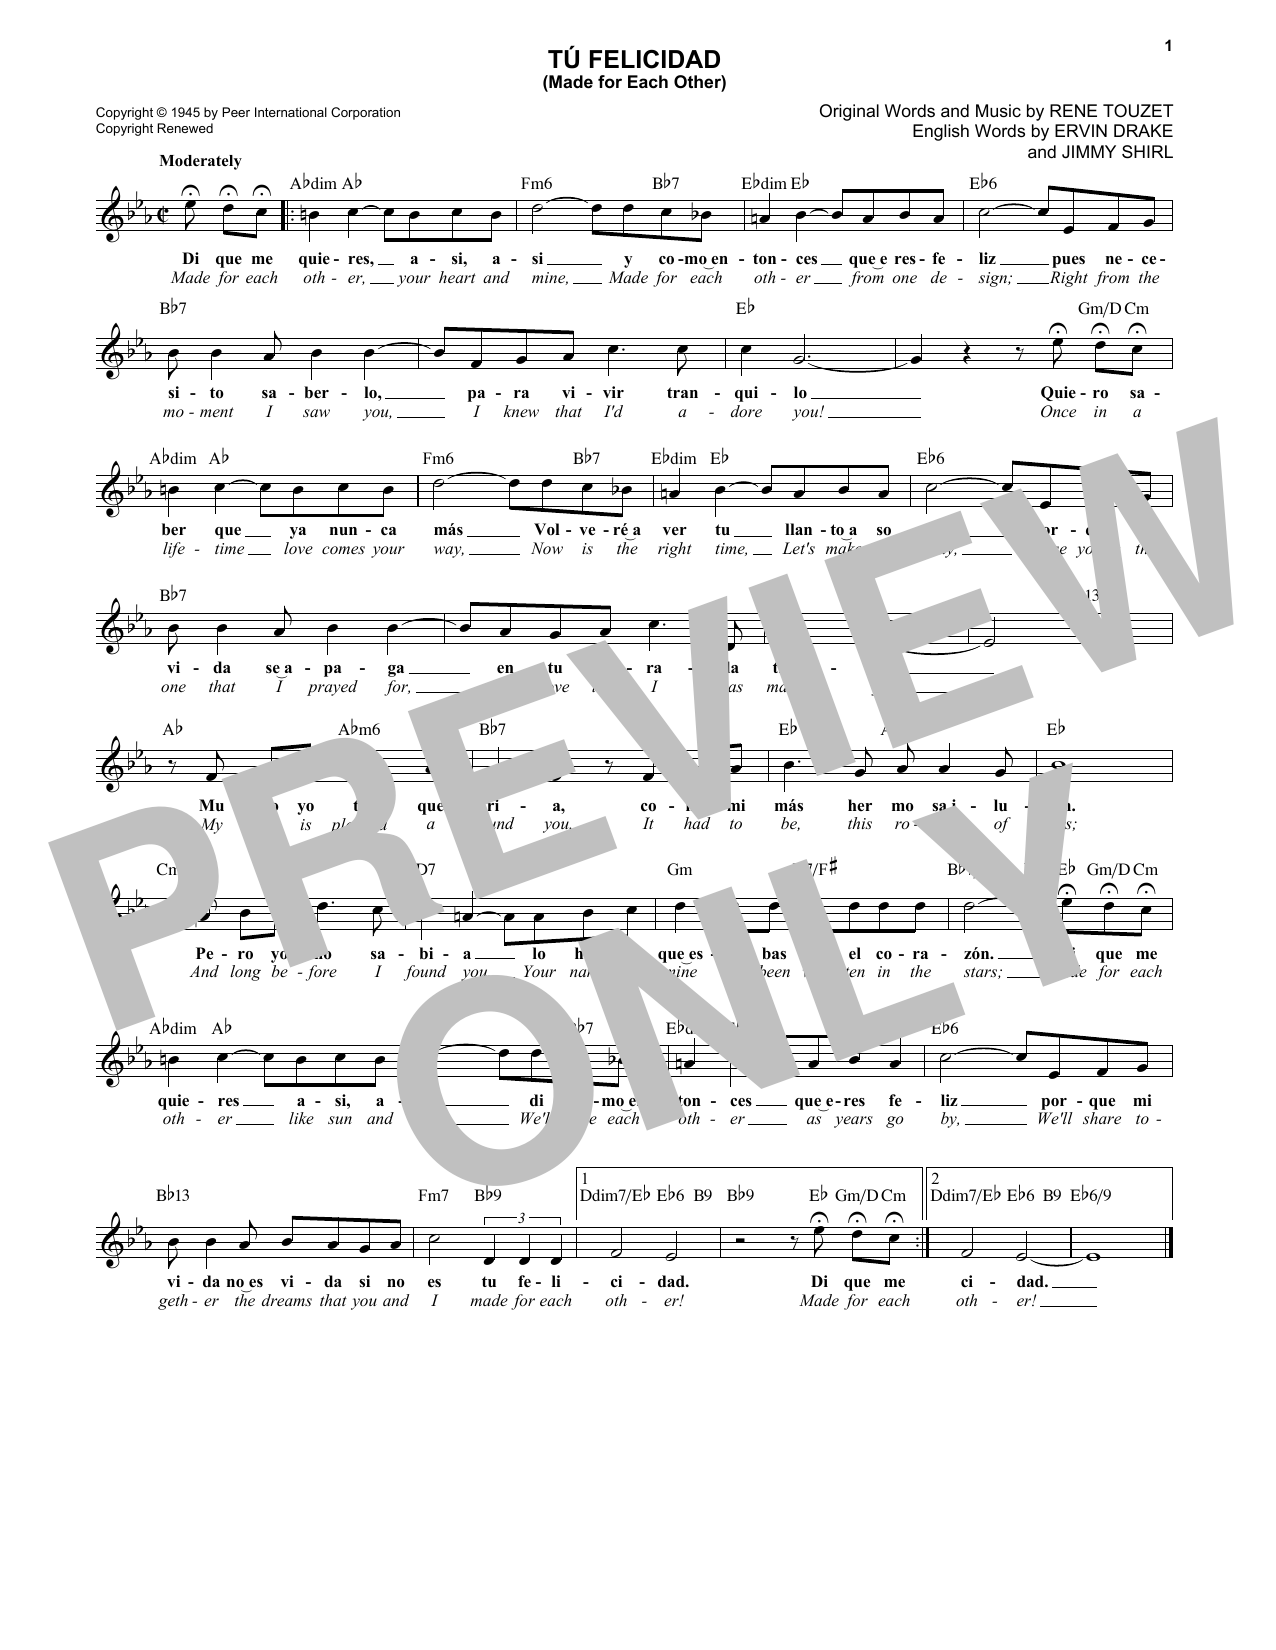 Ervin Drake Tu Felicidad (Made For Each Other) Sheet Music Notes & Chords for Melody Line, Lyrics & Chords - Download or Print PDF